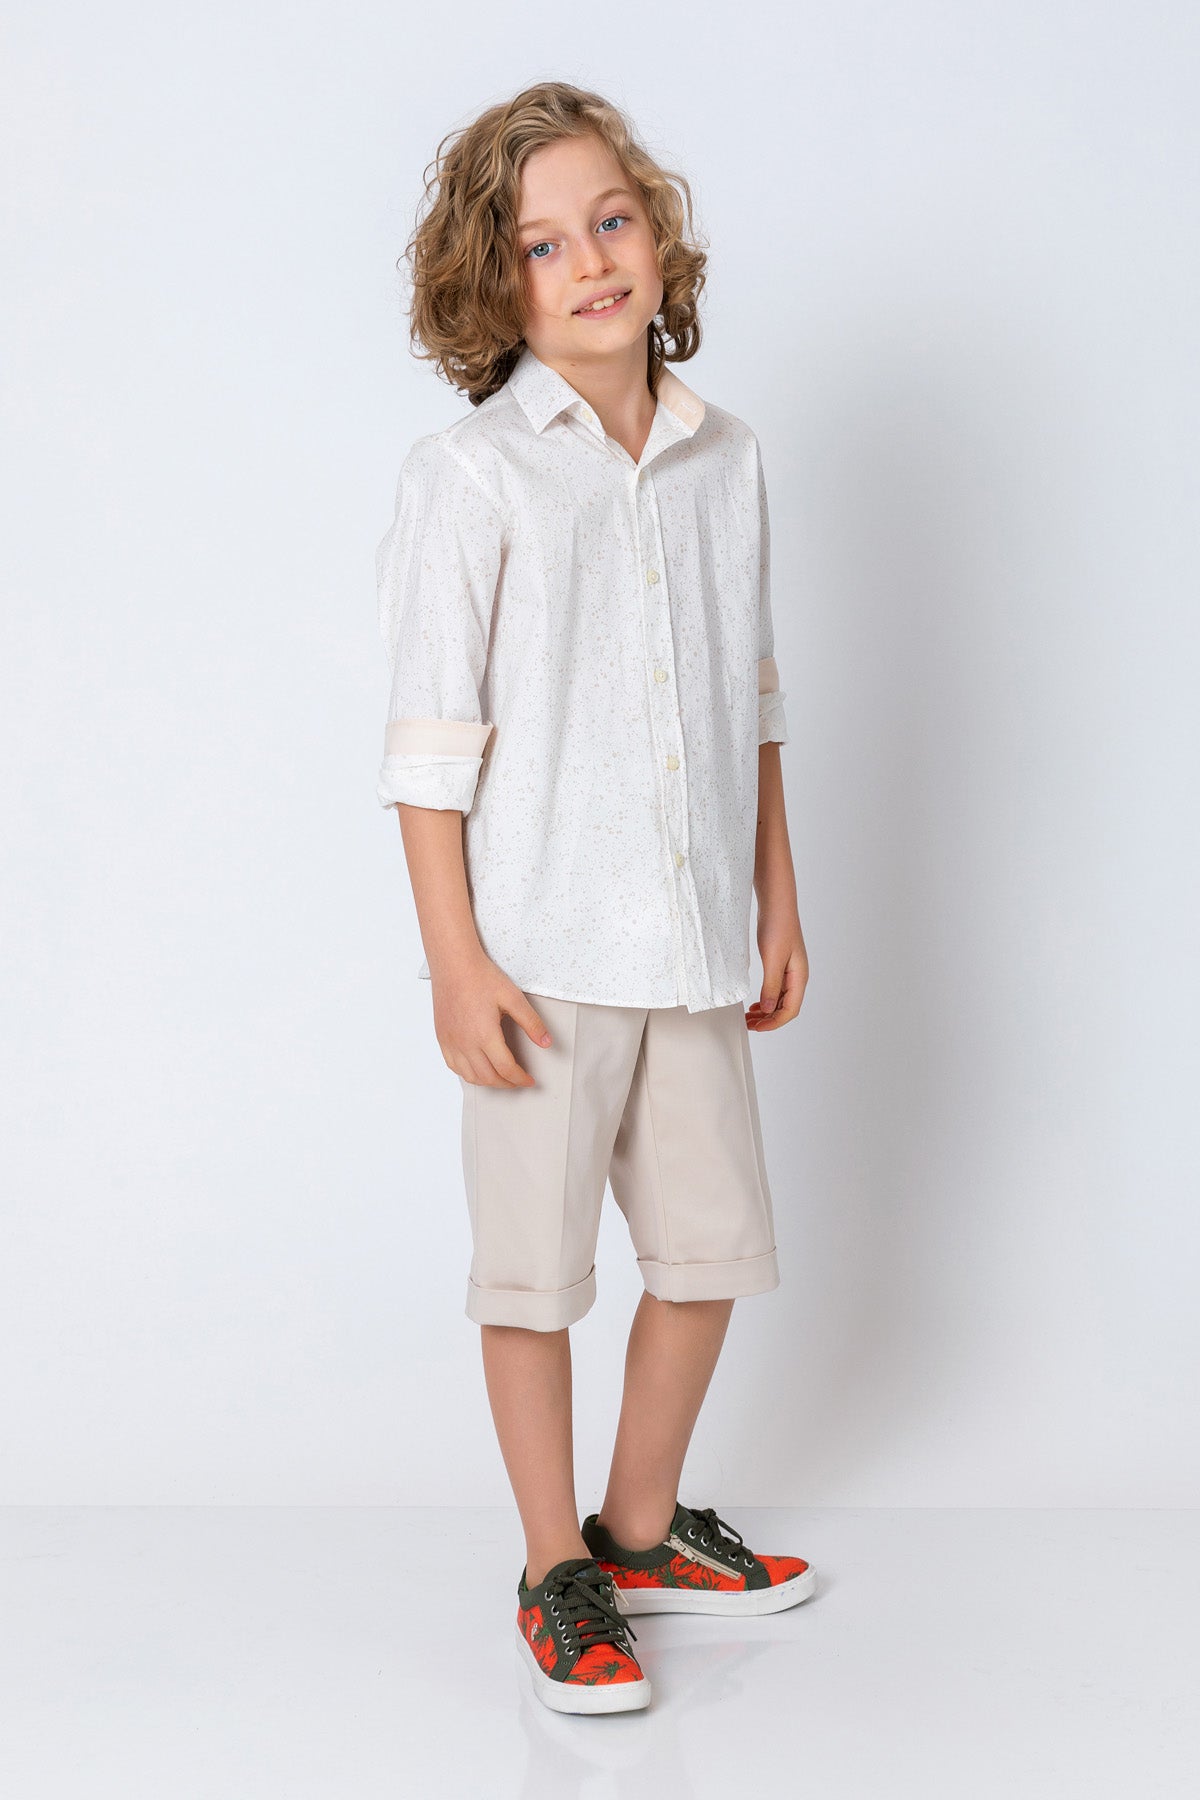 InCity Kids Boys Collared Long Sleeve Button Down Fashion Shirt InCity Boys & Girls